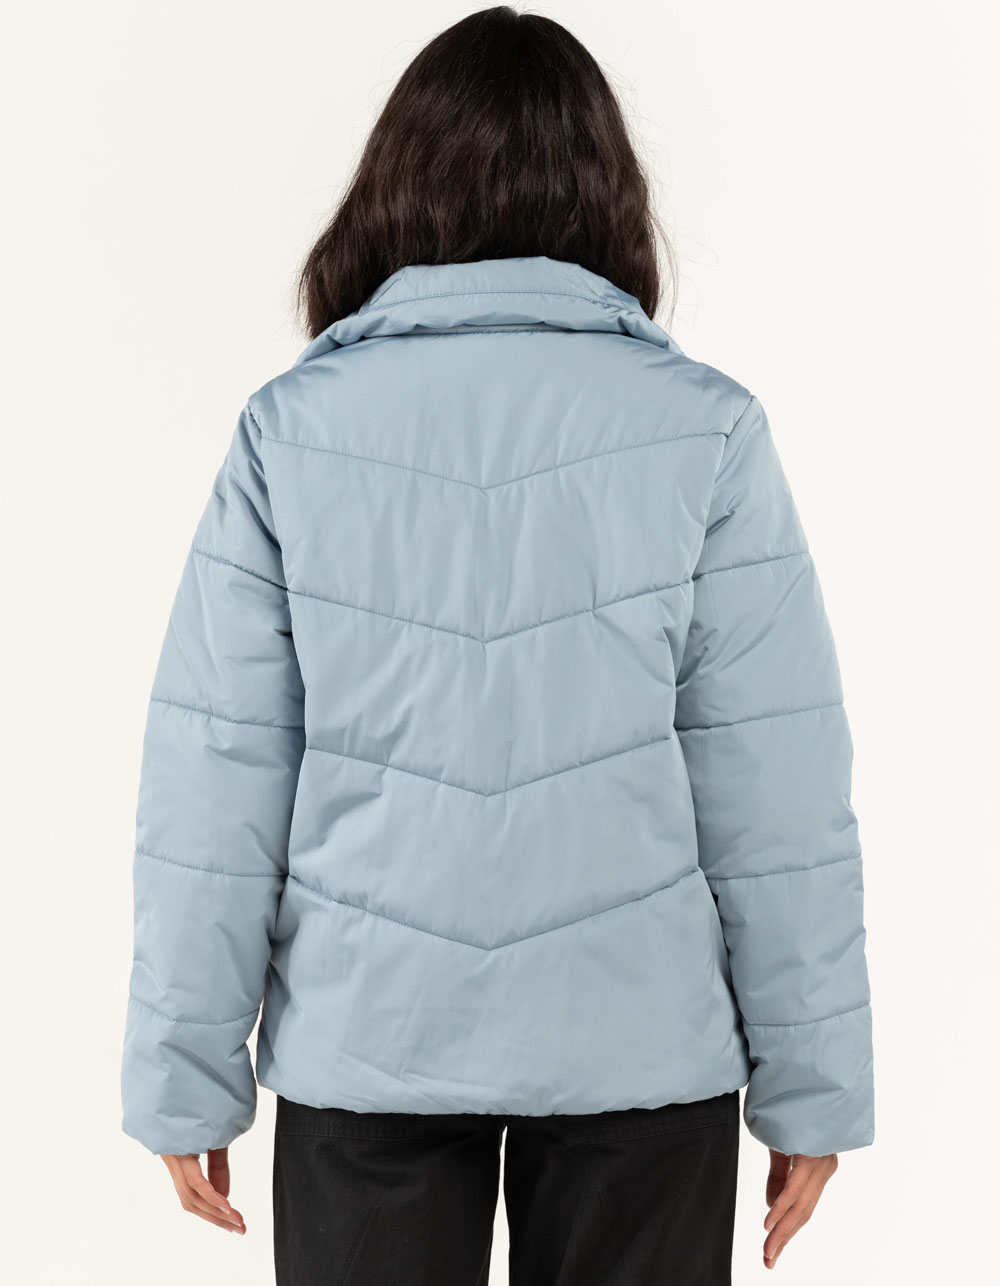 VANS Womens - V MTE | Tillys Foundry BLUE Jacket Puff